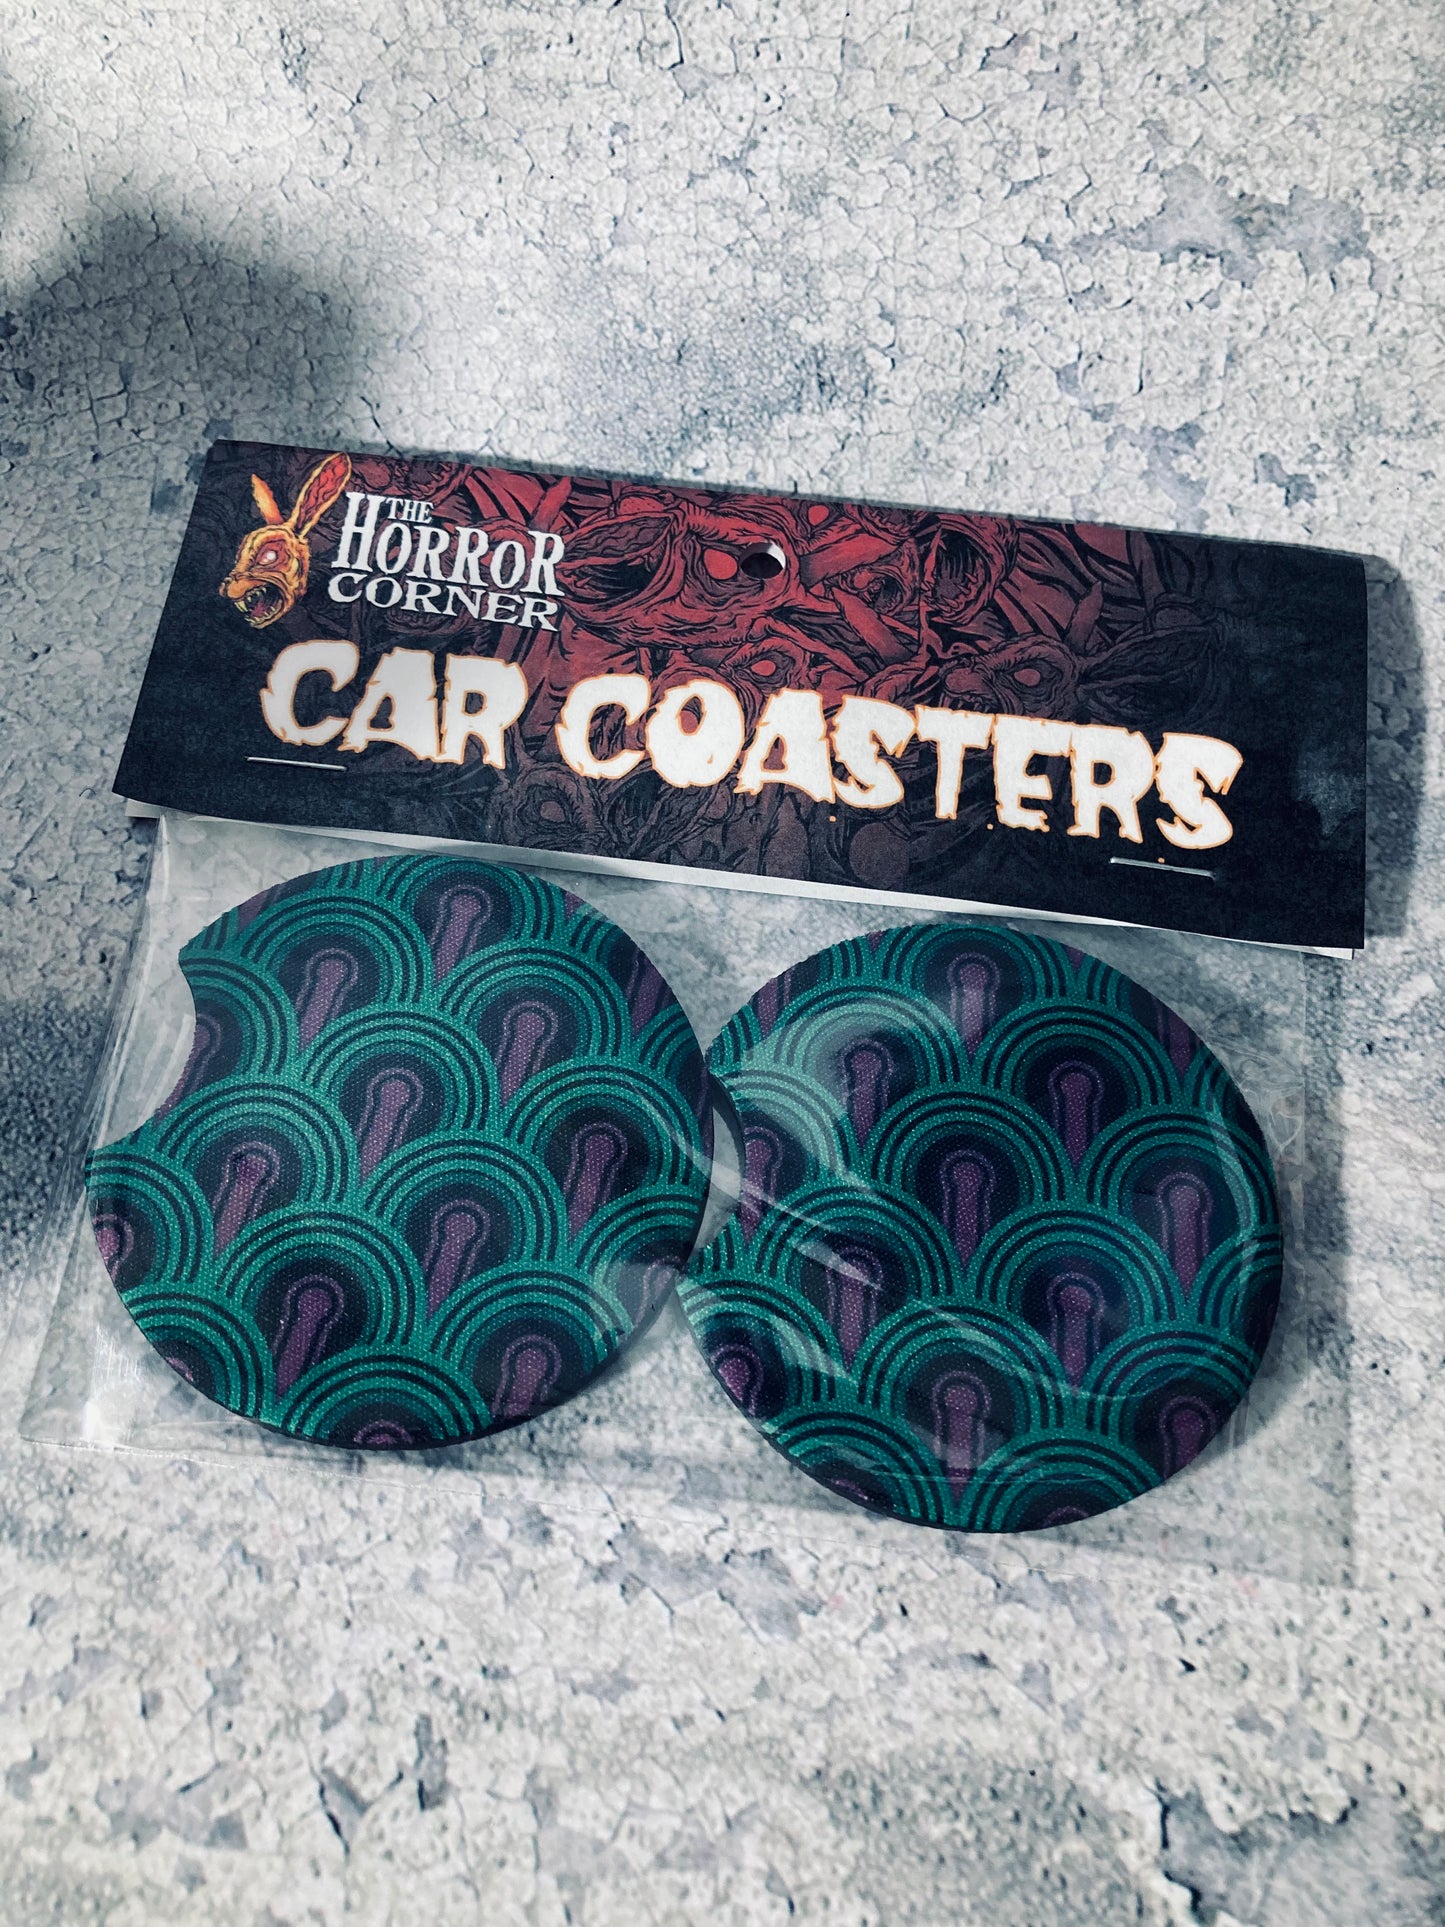 Room 237 car coaster pack